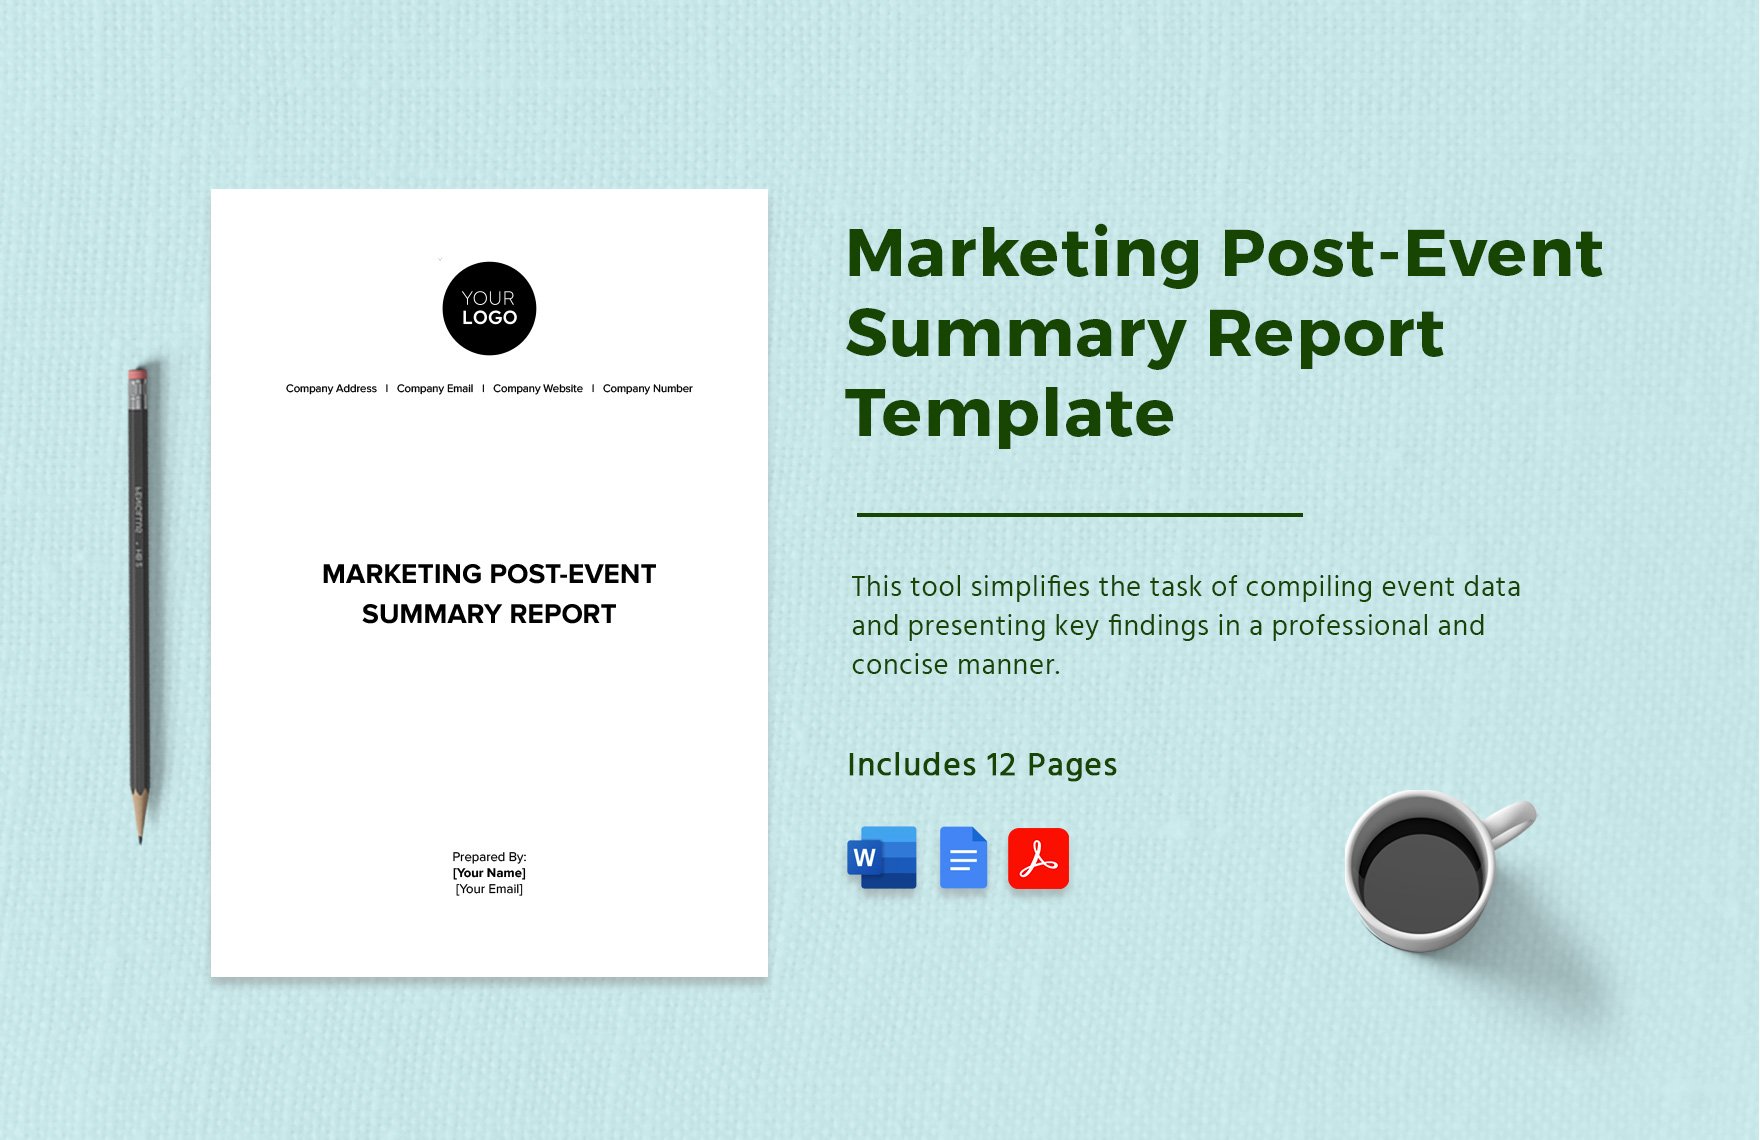 Marketing Post-Event Summary Report Template